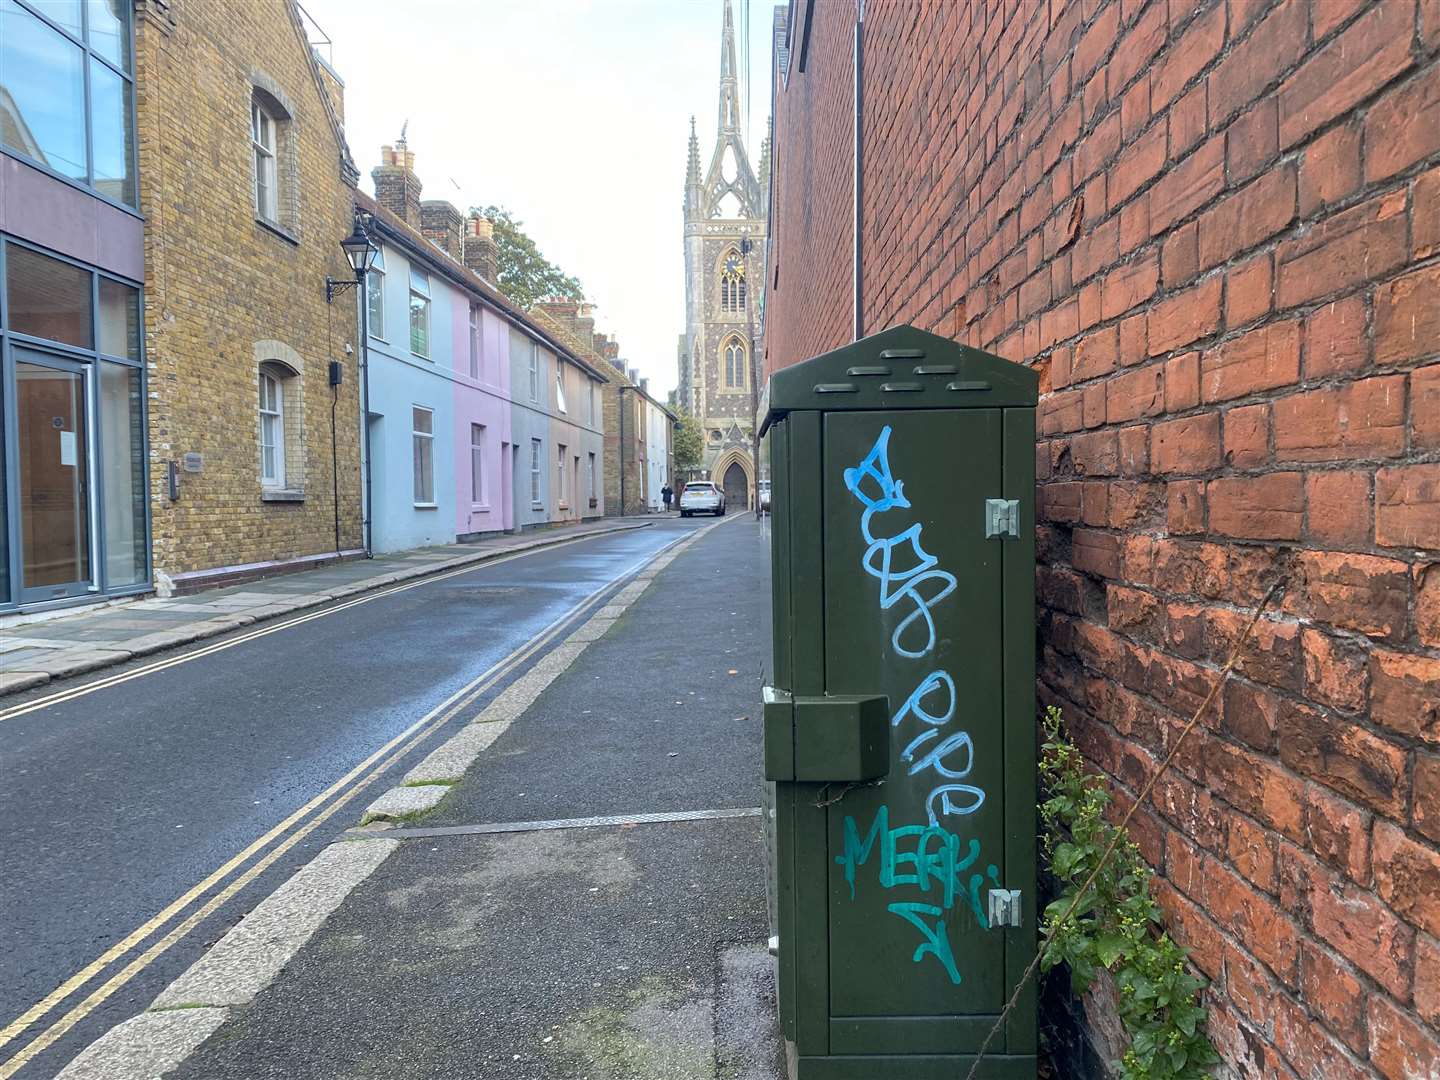 Graffiti on another BT phone relay box in Faversham